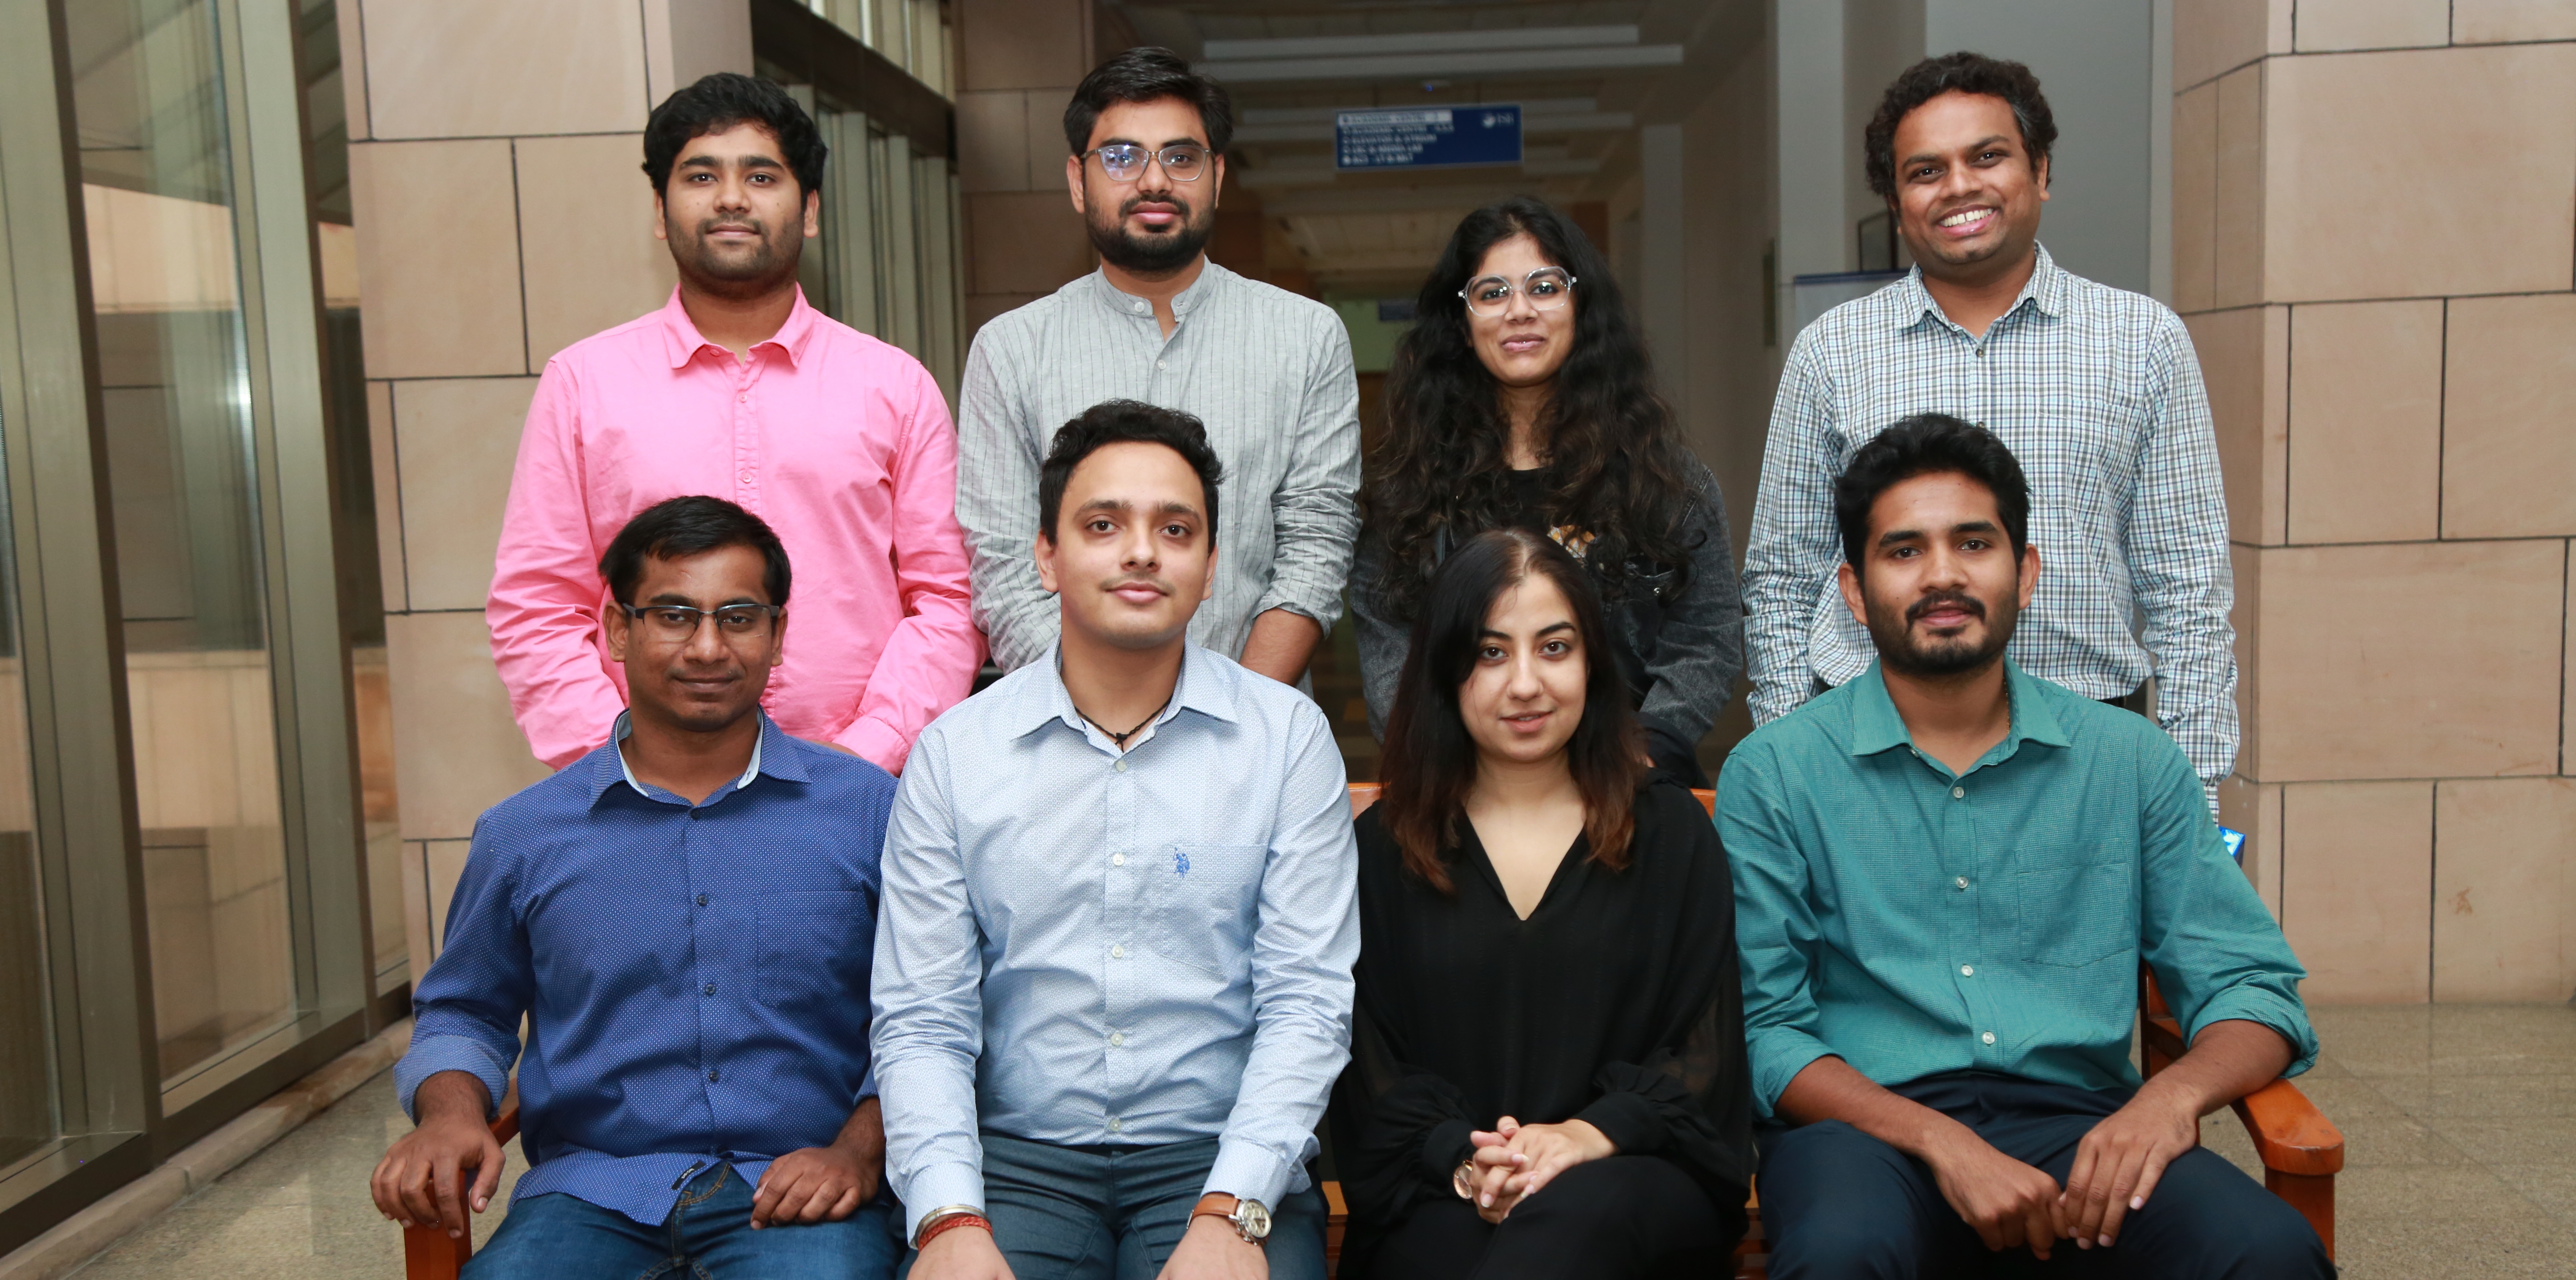 Jubilant researchers: L-R) Sachin Kumar, Prashanth Shukla, Ahaana Mahanti, Vinod Kumar, Nareen Mulugu, Ankur Jaiswal, Shilpan Dubey, Saket Chityala